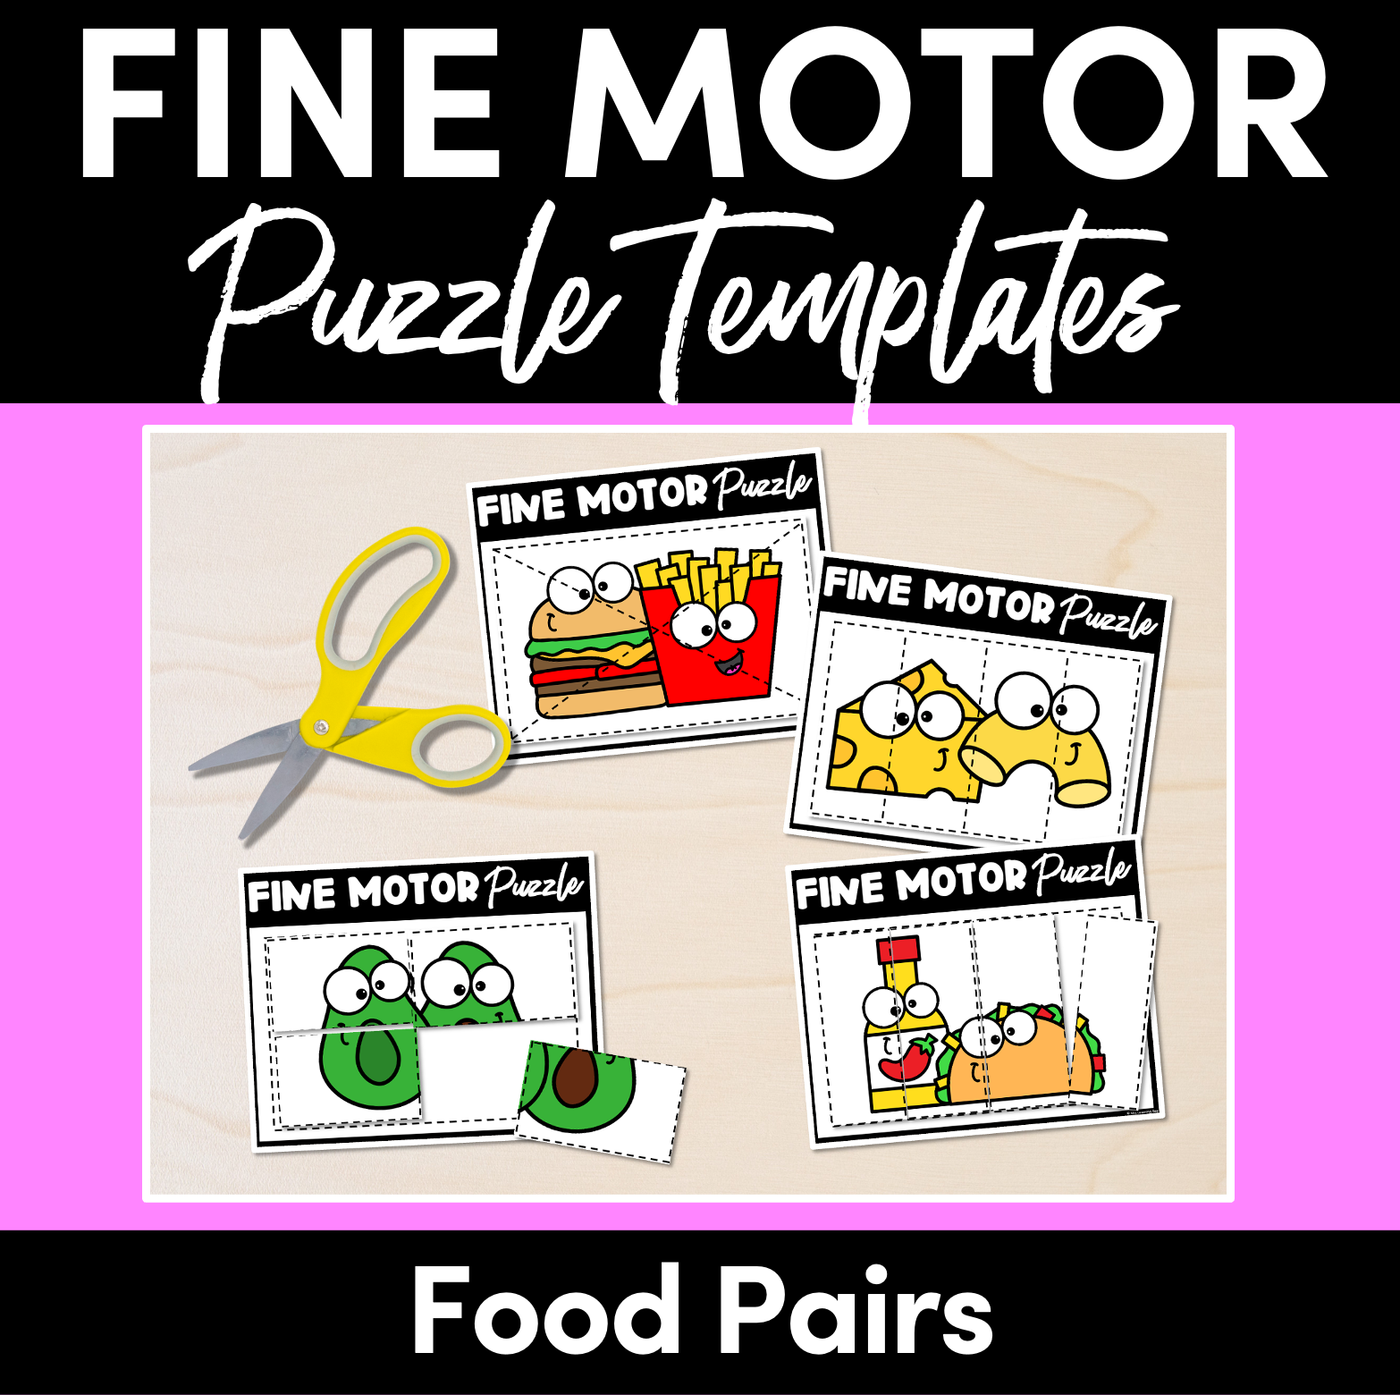 FINE MOTOR PUZZLE TEMPLATES - Food Pairs